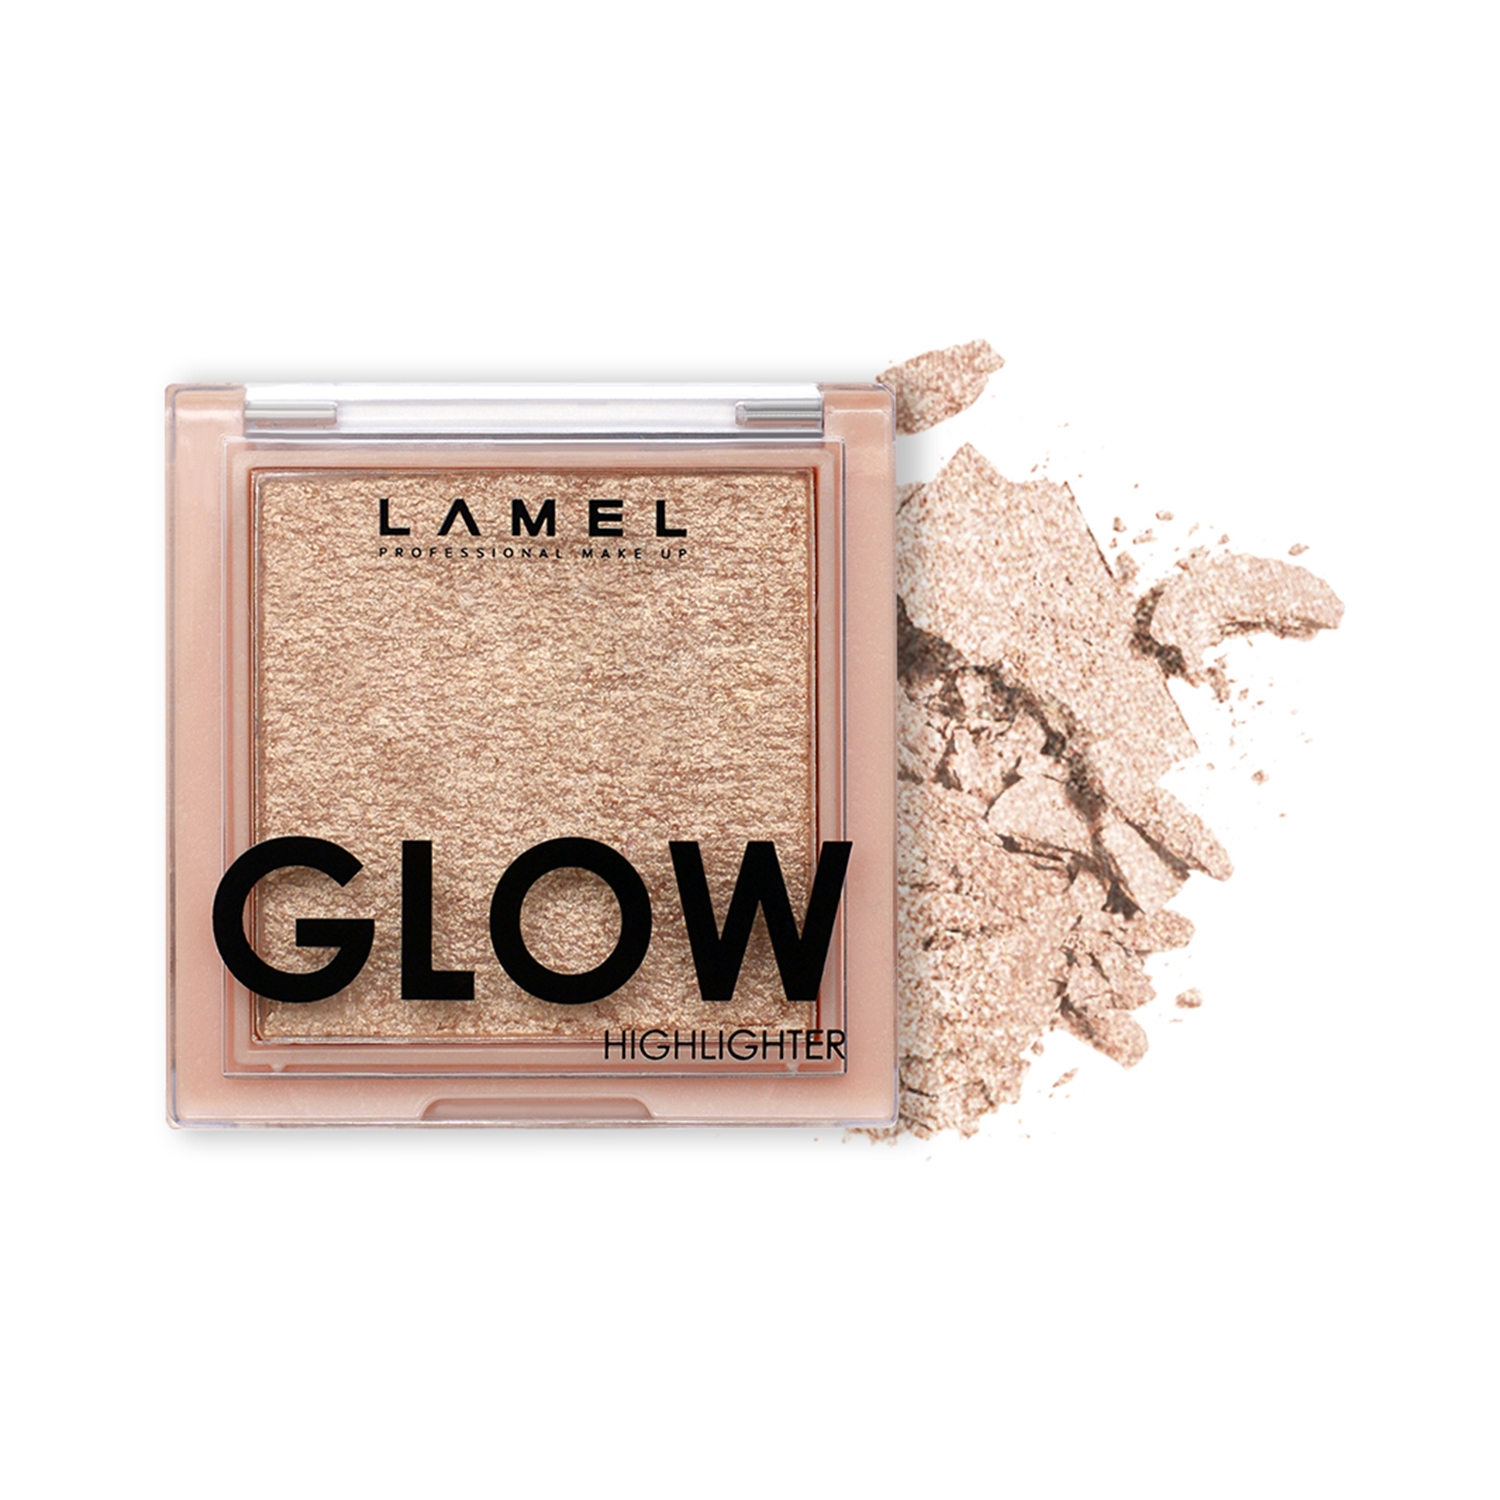 Lamel | Lamel Glow Highlighter - N 402 Sun (3.8g)